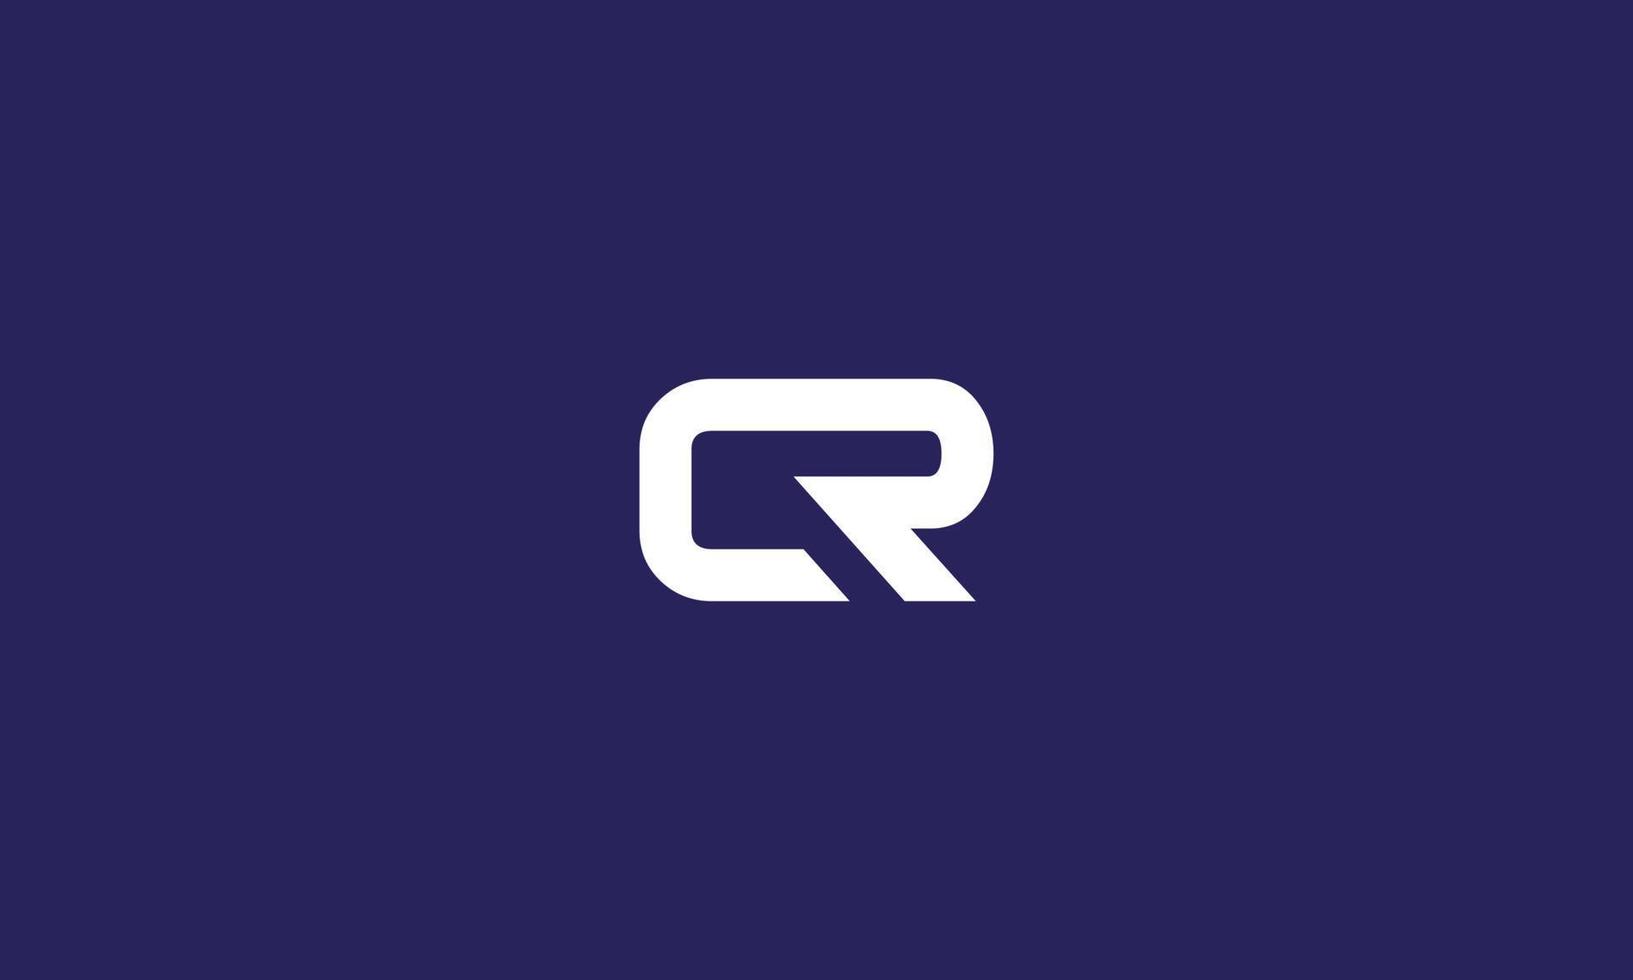 CR logo . letter c r logo design . creative and modern logo design. vector